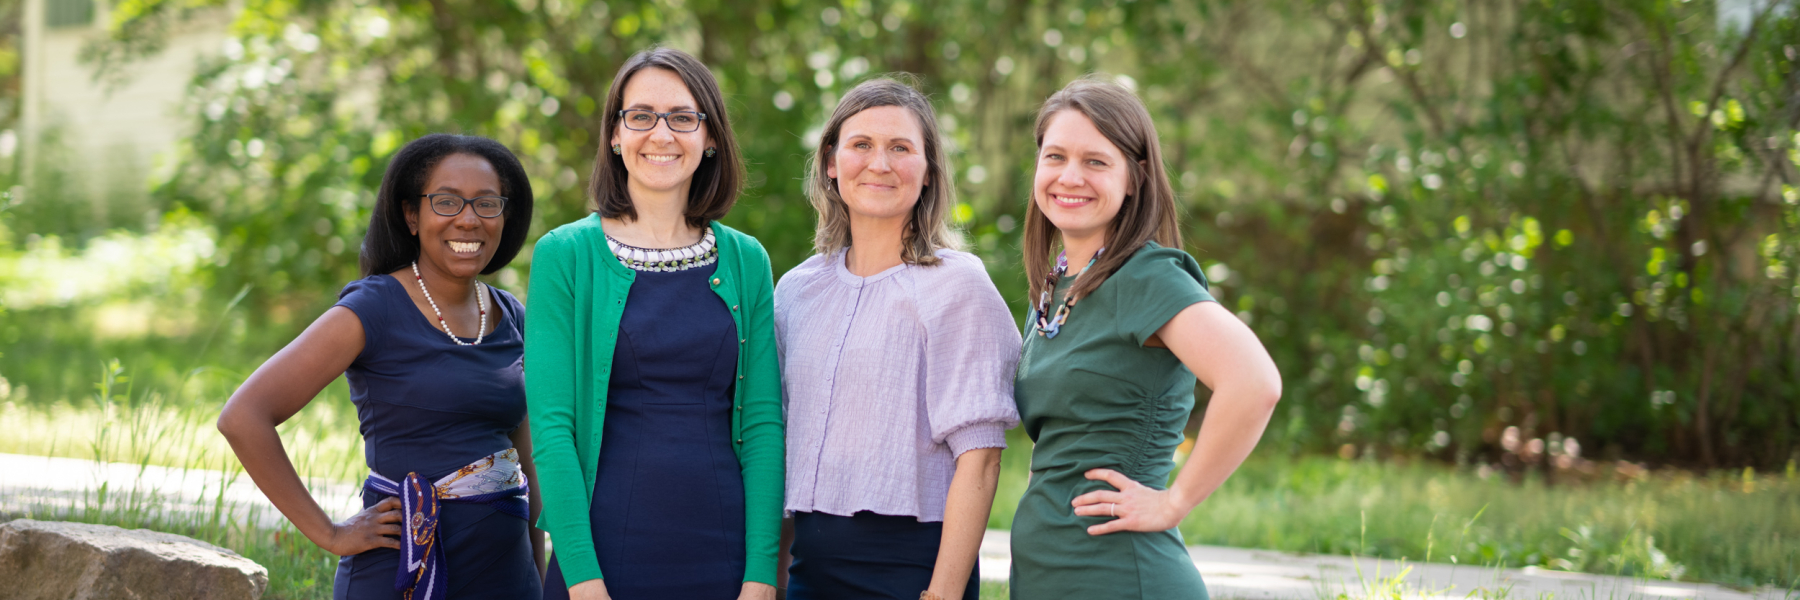 FAME leadership team: Dr. Christine Sharkey, Dr. Elizabeth Chapman, Kara Westmas, Dr. Jessica Tischendorf 